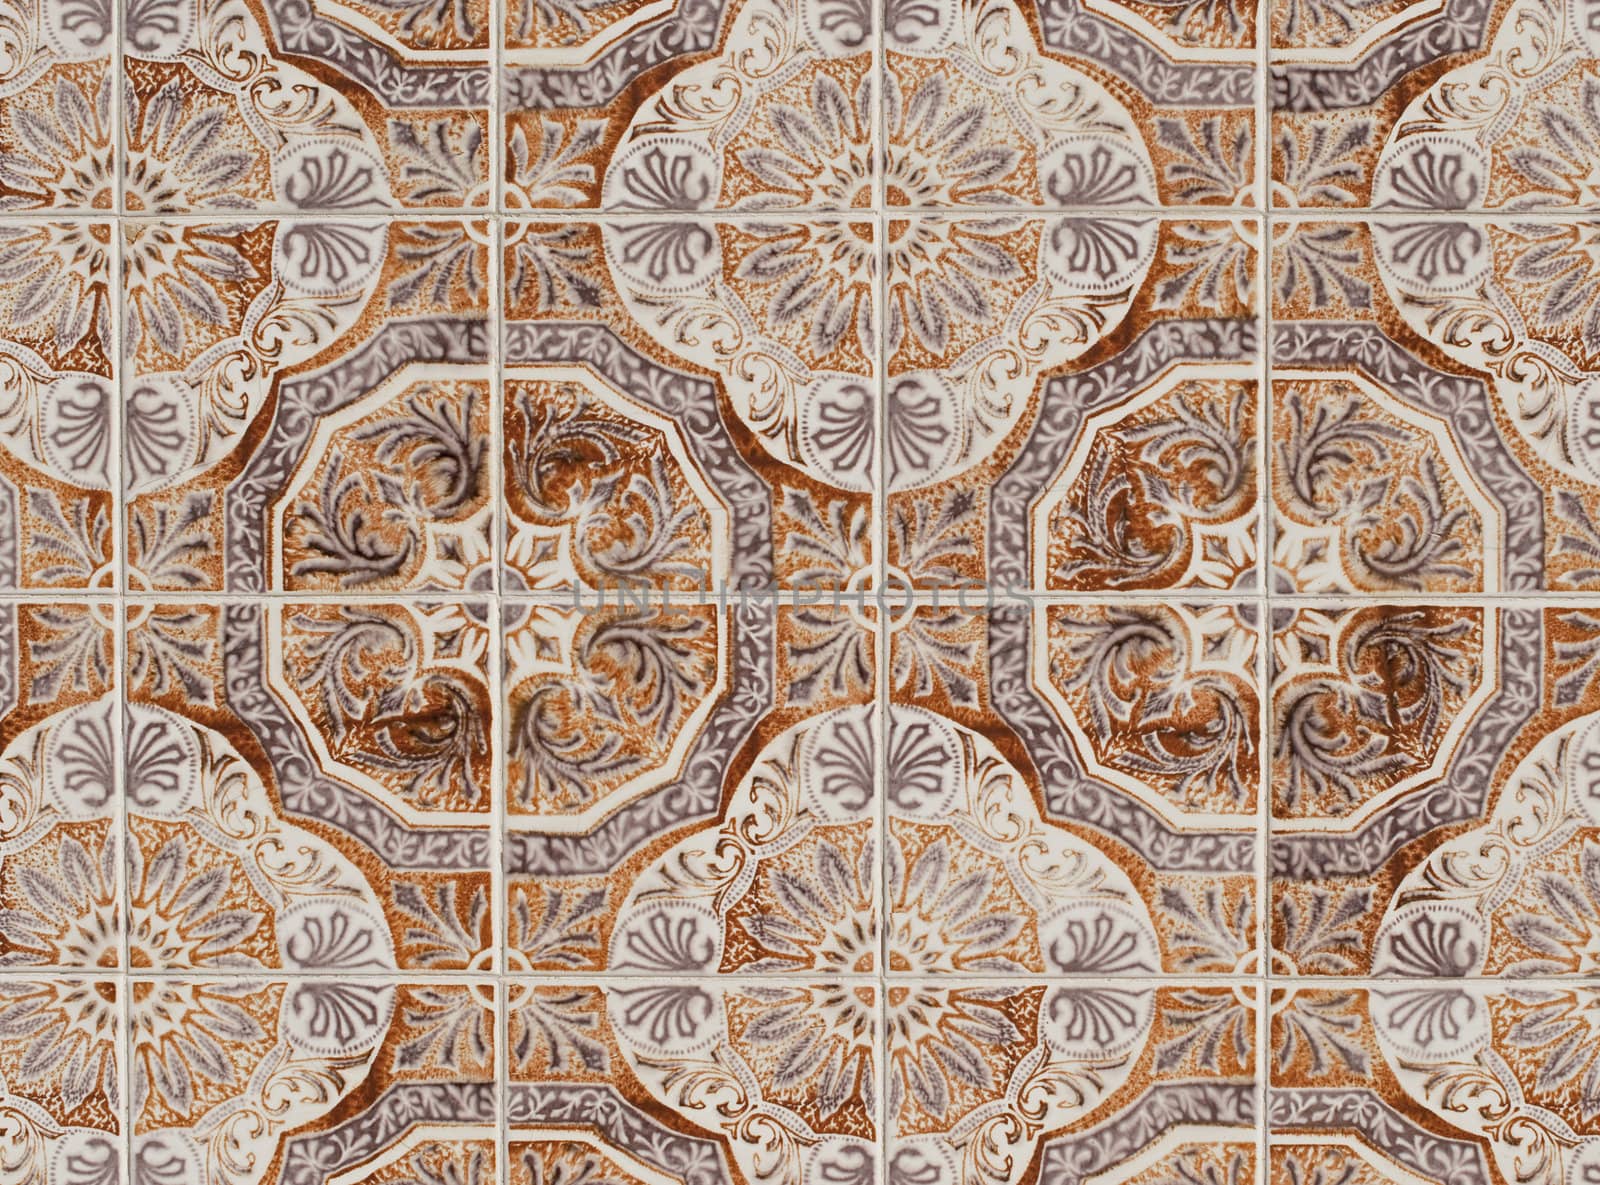 Portuguese glazed tiles 197 by homydesign